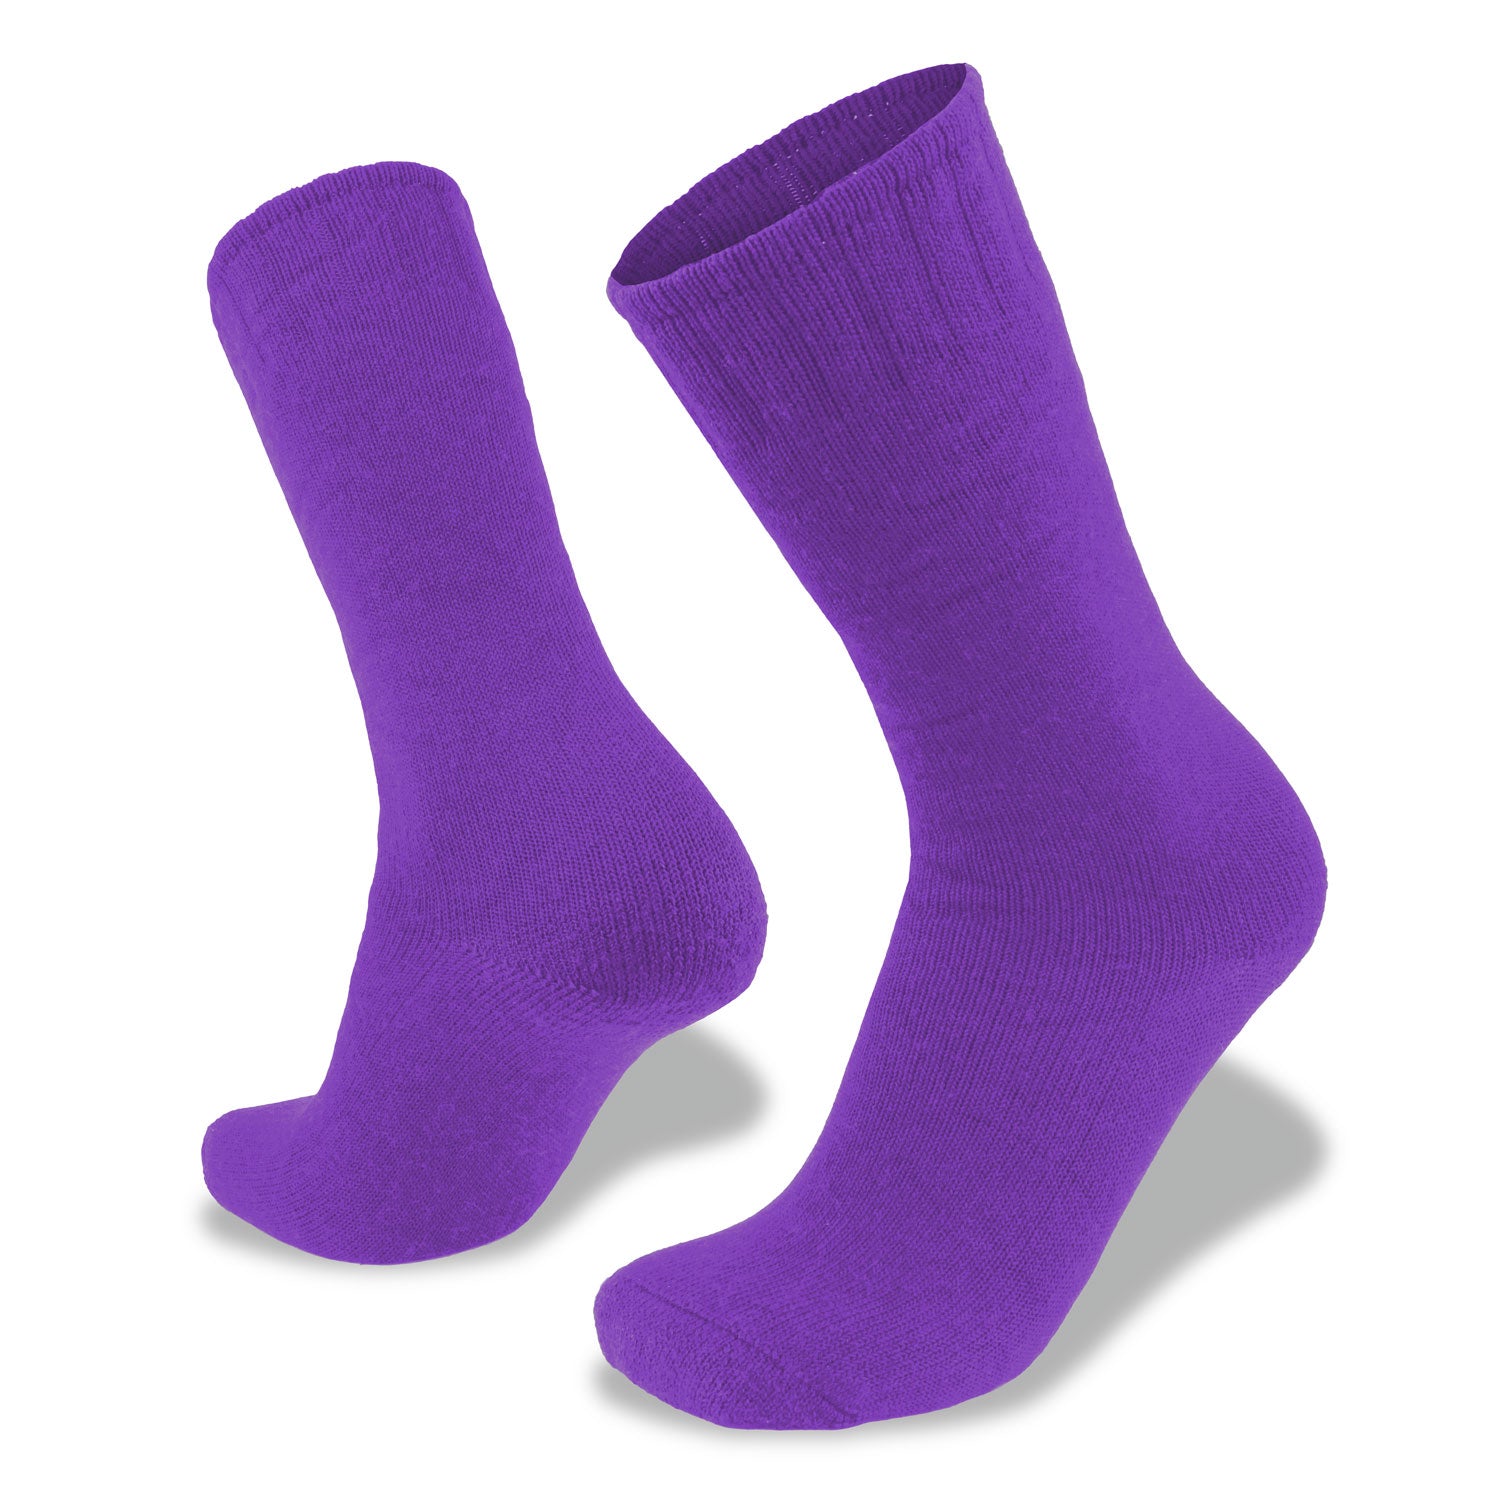 3 Peaks Ranger Merino Socks [Sz:3-8 Clr:PURPLE]